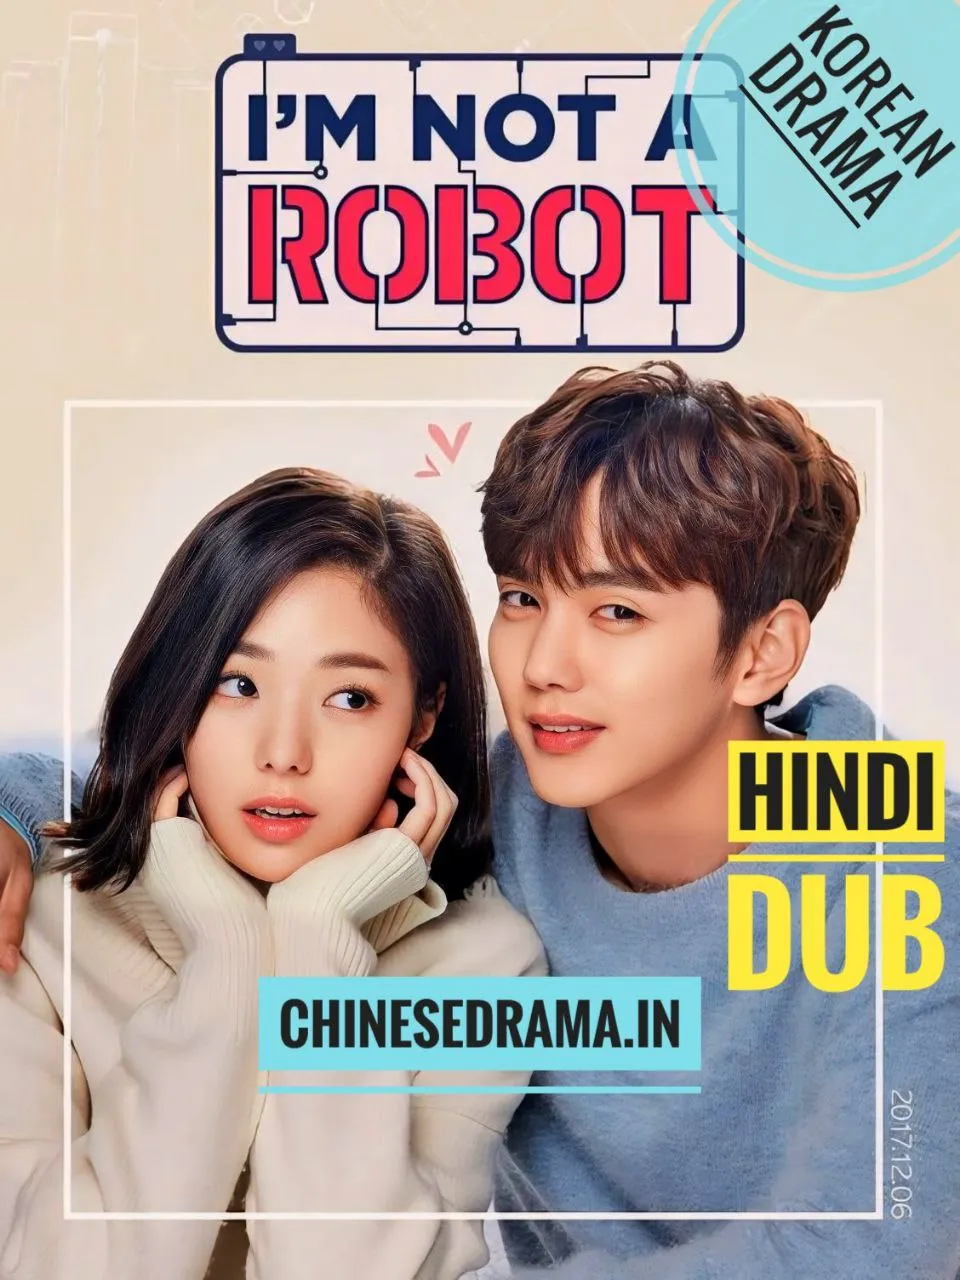 I’m Not a Robot (2017) Hindi Dub [Korean Drama]